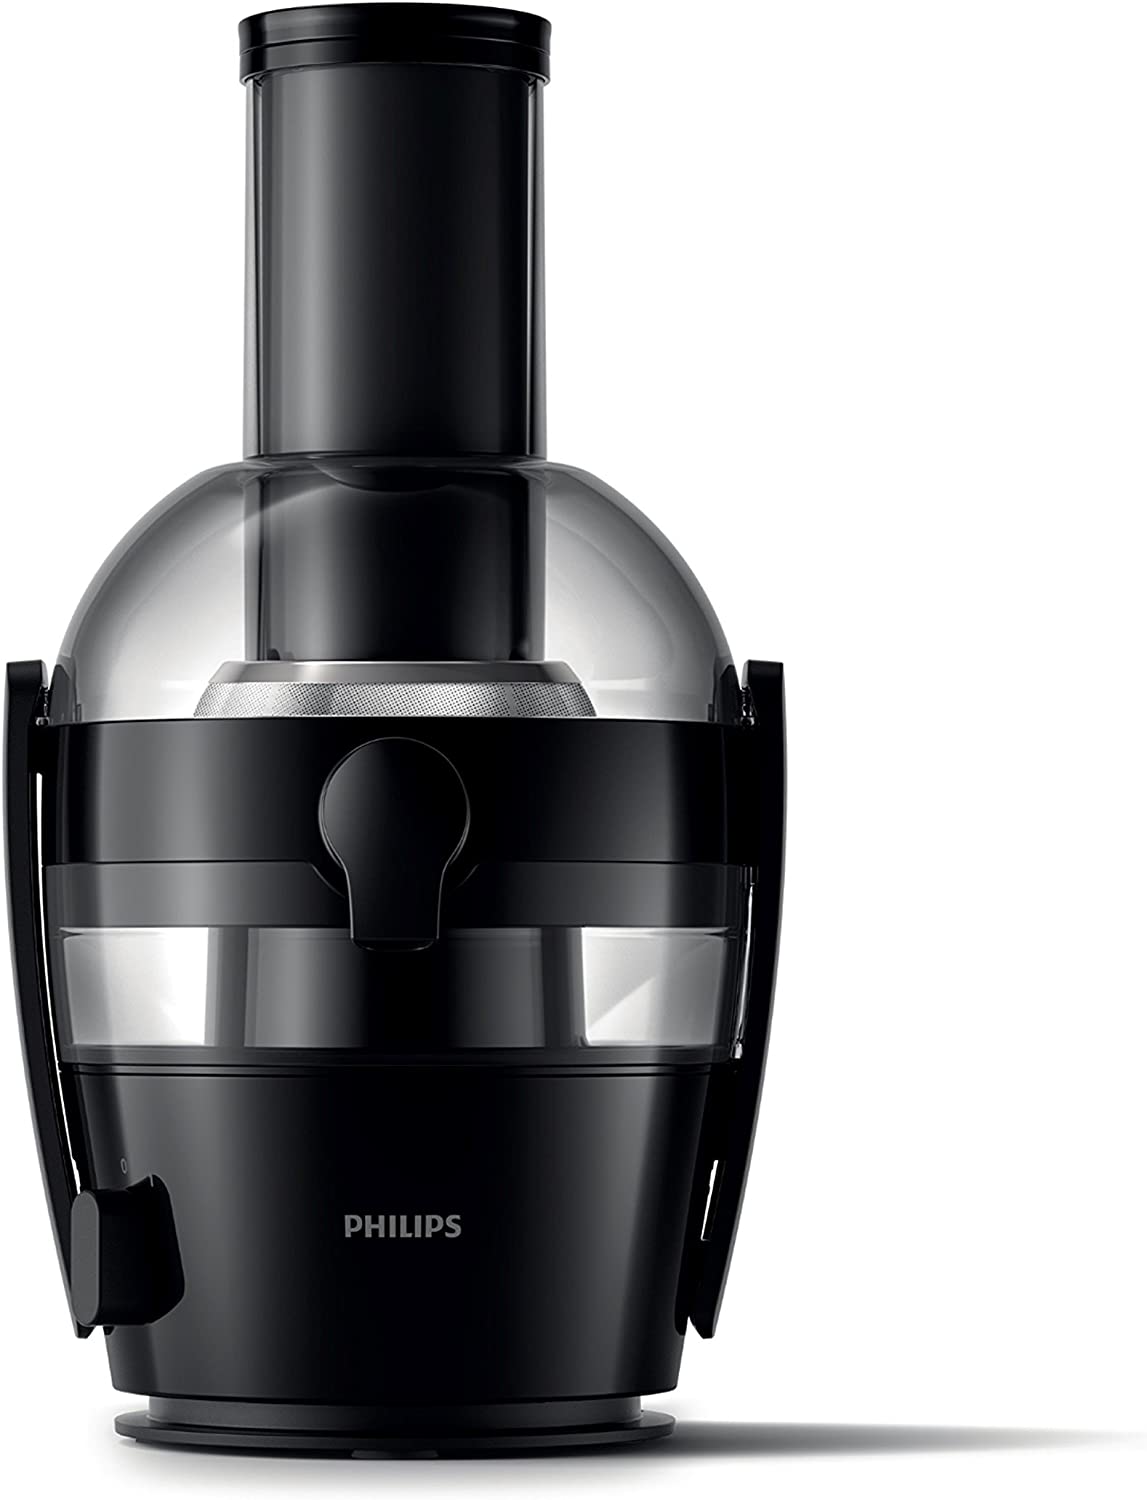 Philips Domestic Appliances Philips HR1855/06 650W Black QuickClean Technology Juicer